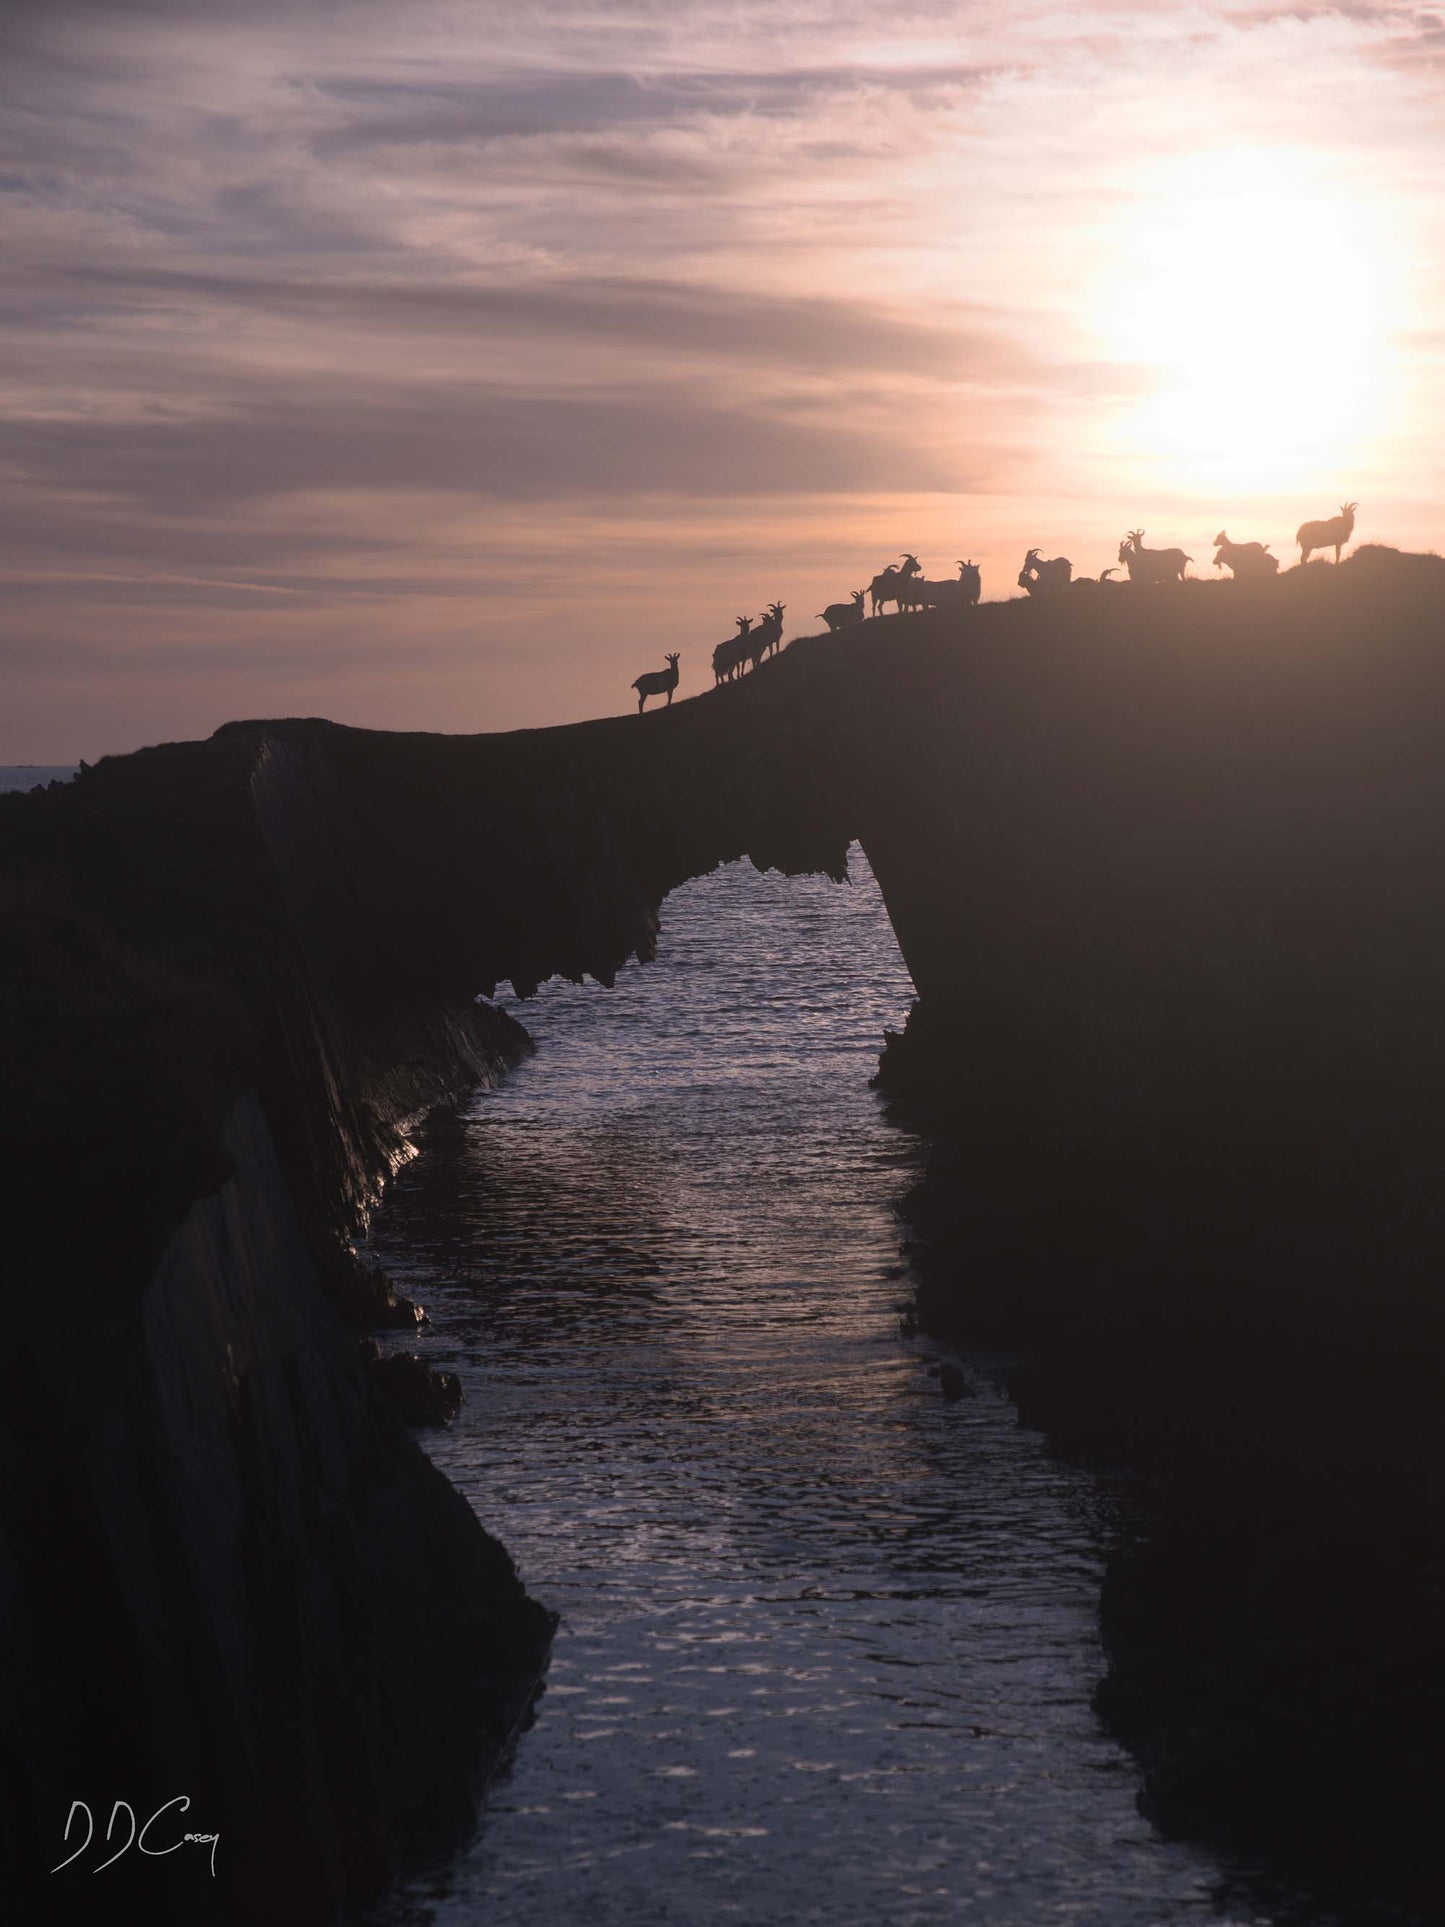 Photo print of wild goats crossing sea arch on Eastern Skeams island, peeking over a stone wall.